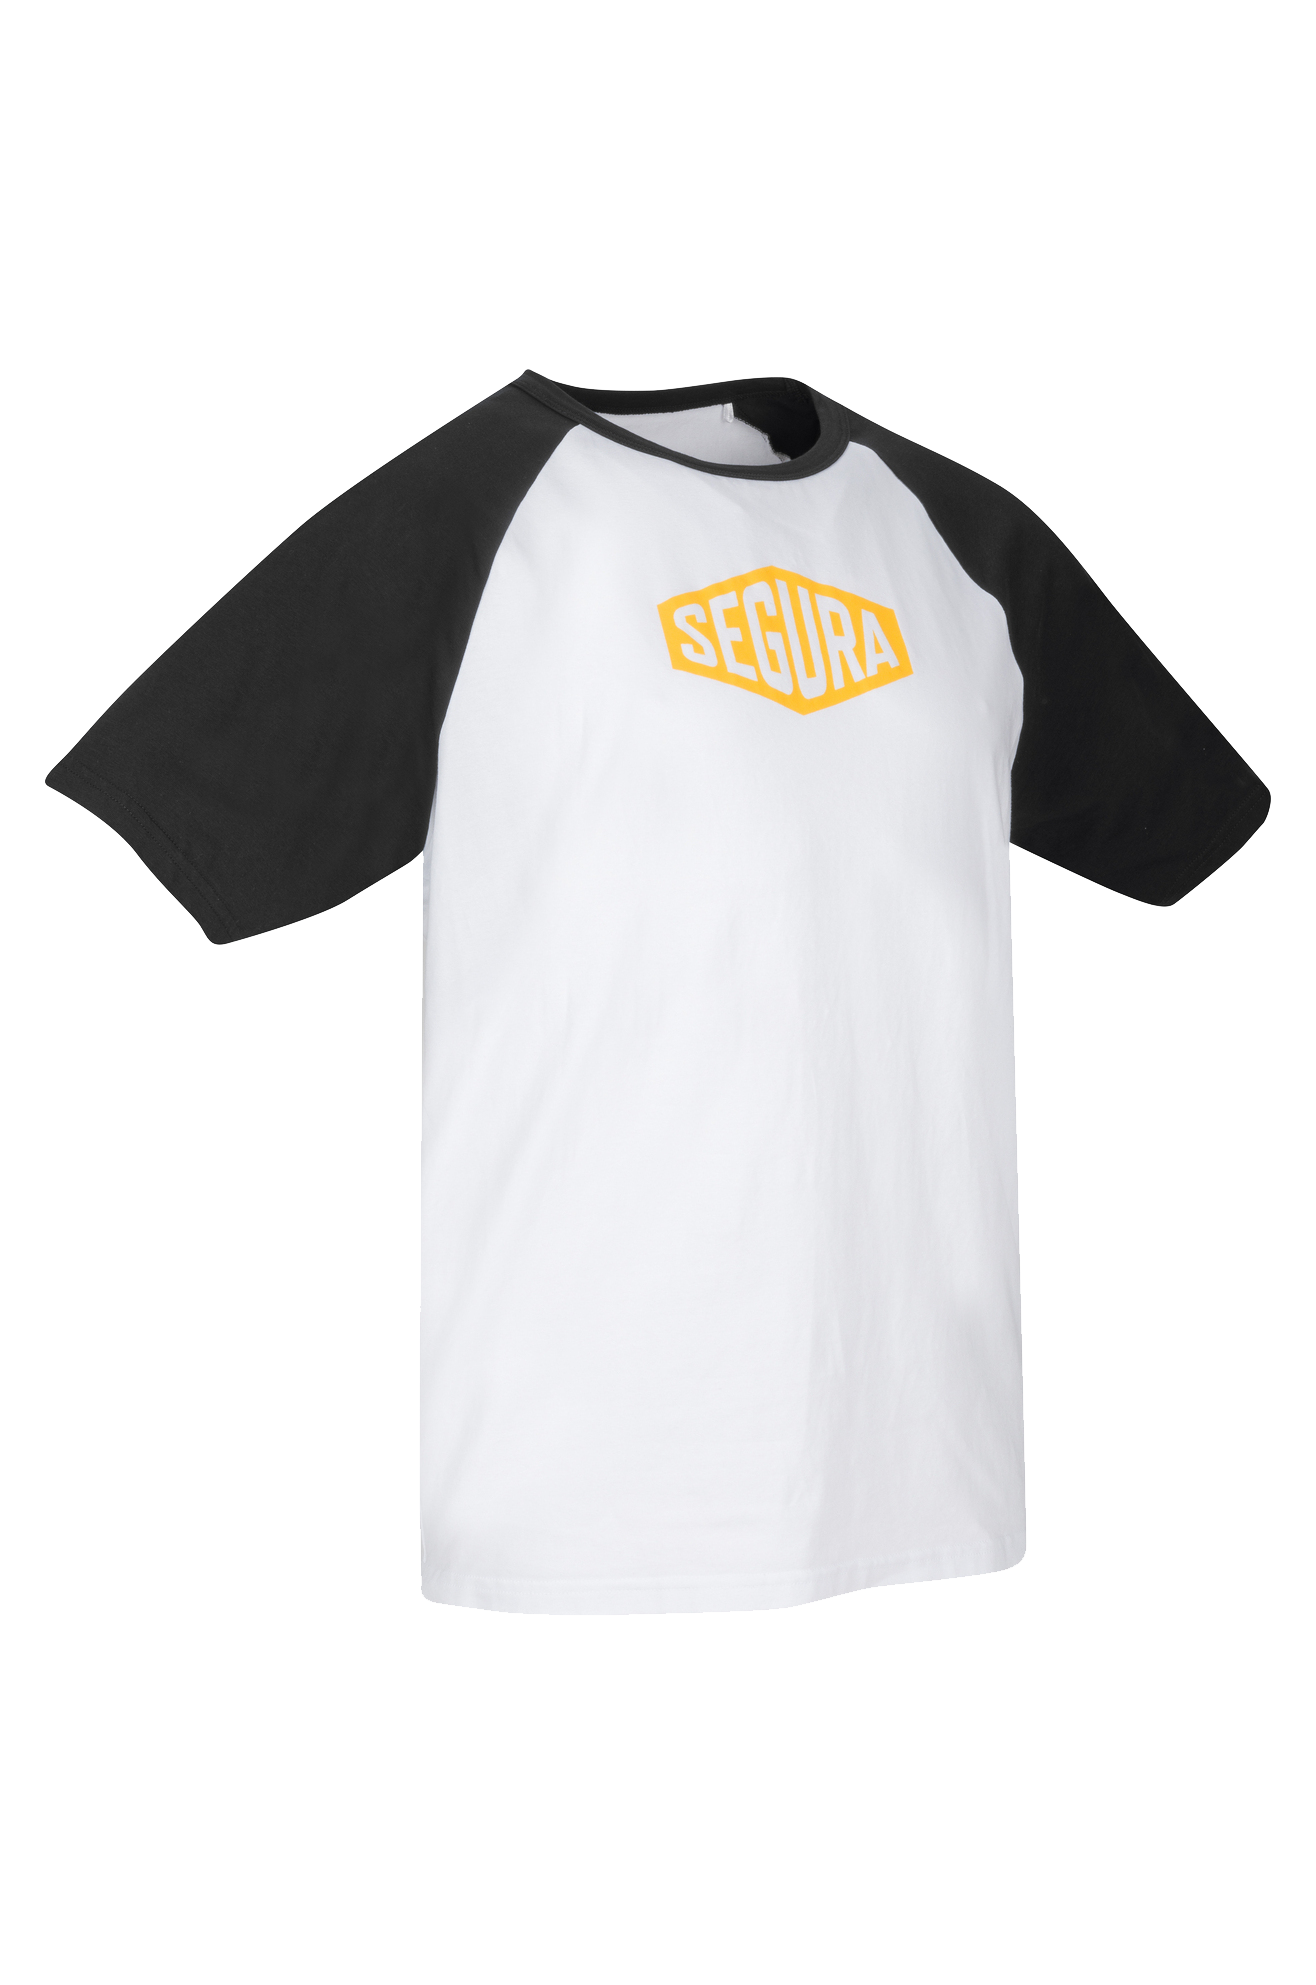 Segura T-Shirt  First Nero-Bianco